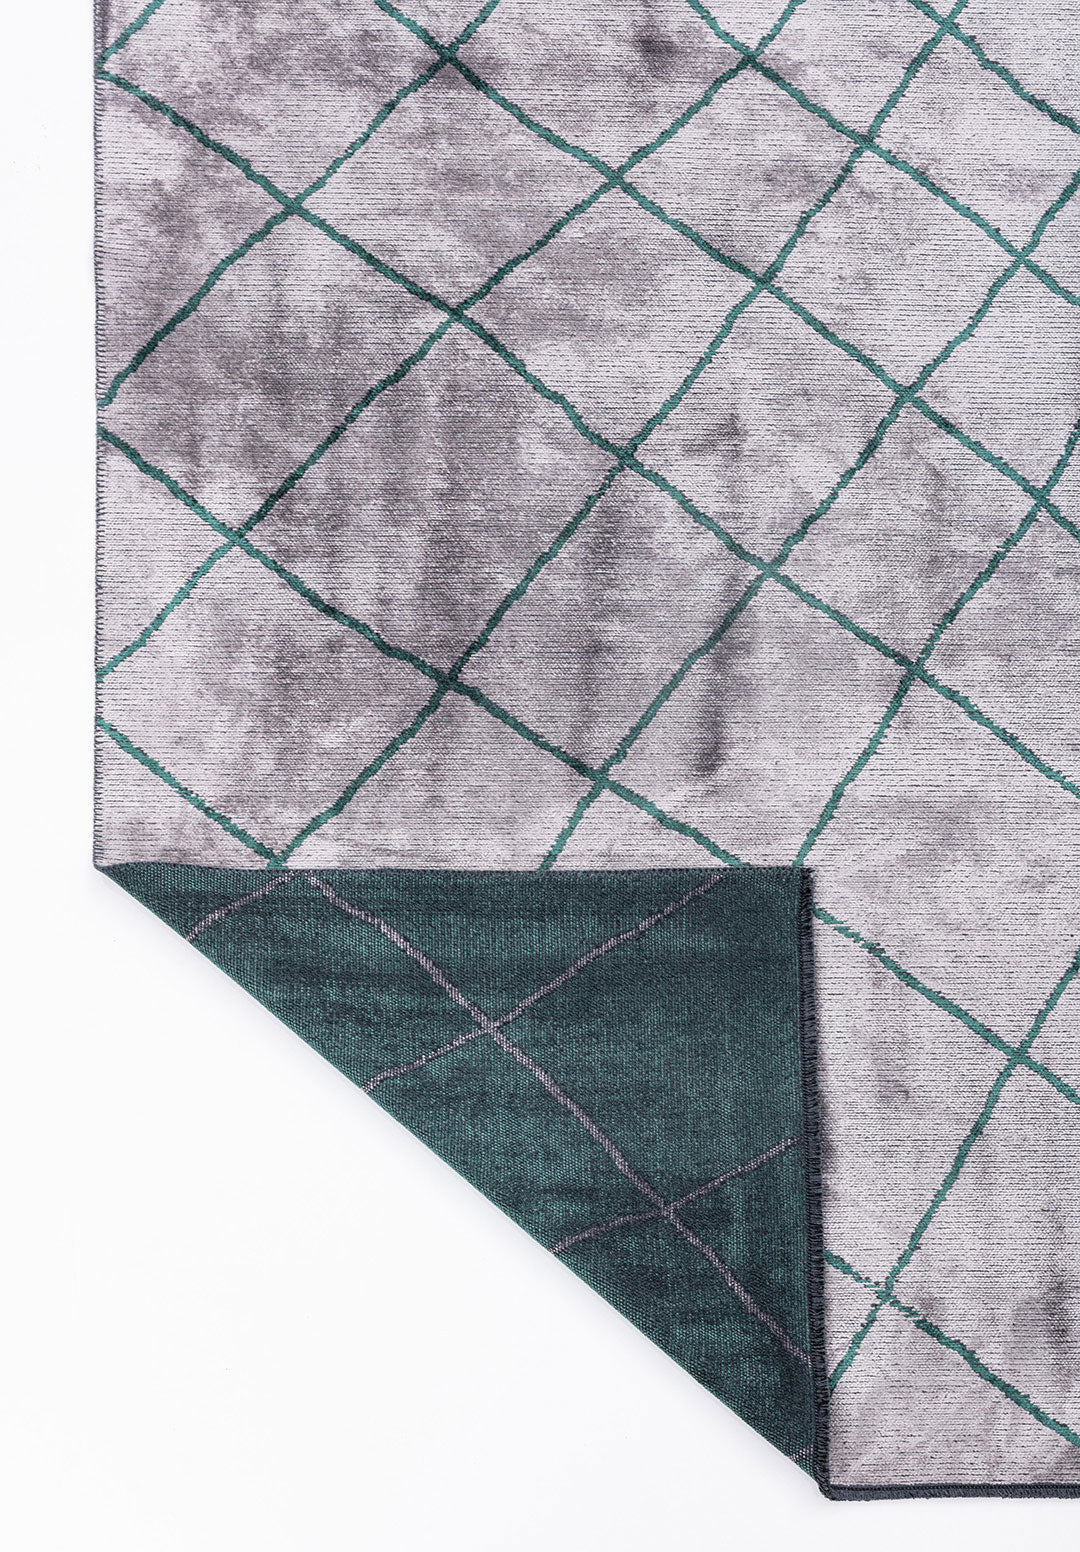 Moroccan Dark Green - Light Grey Rug Rugs - Venetto Design Venettodesign.com